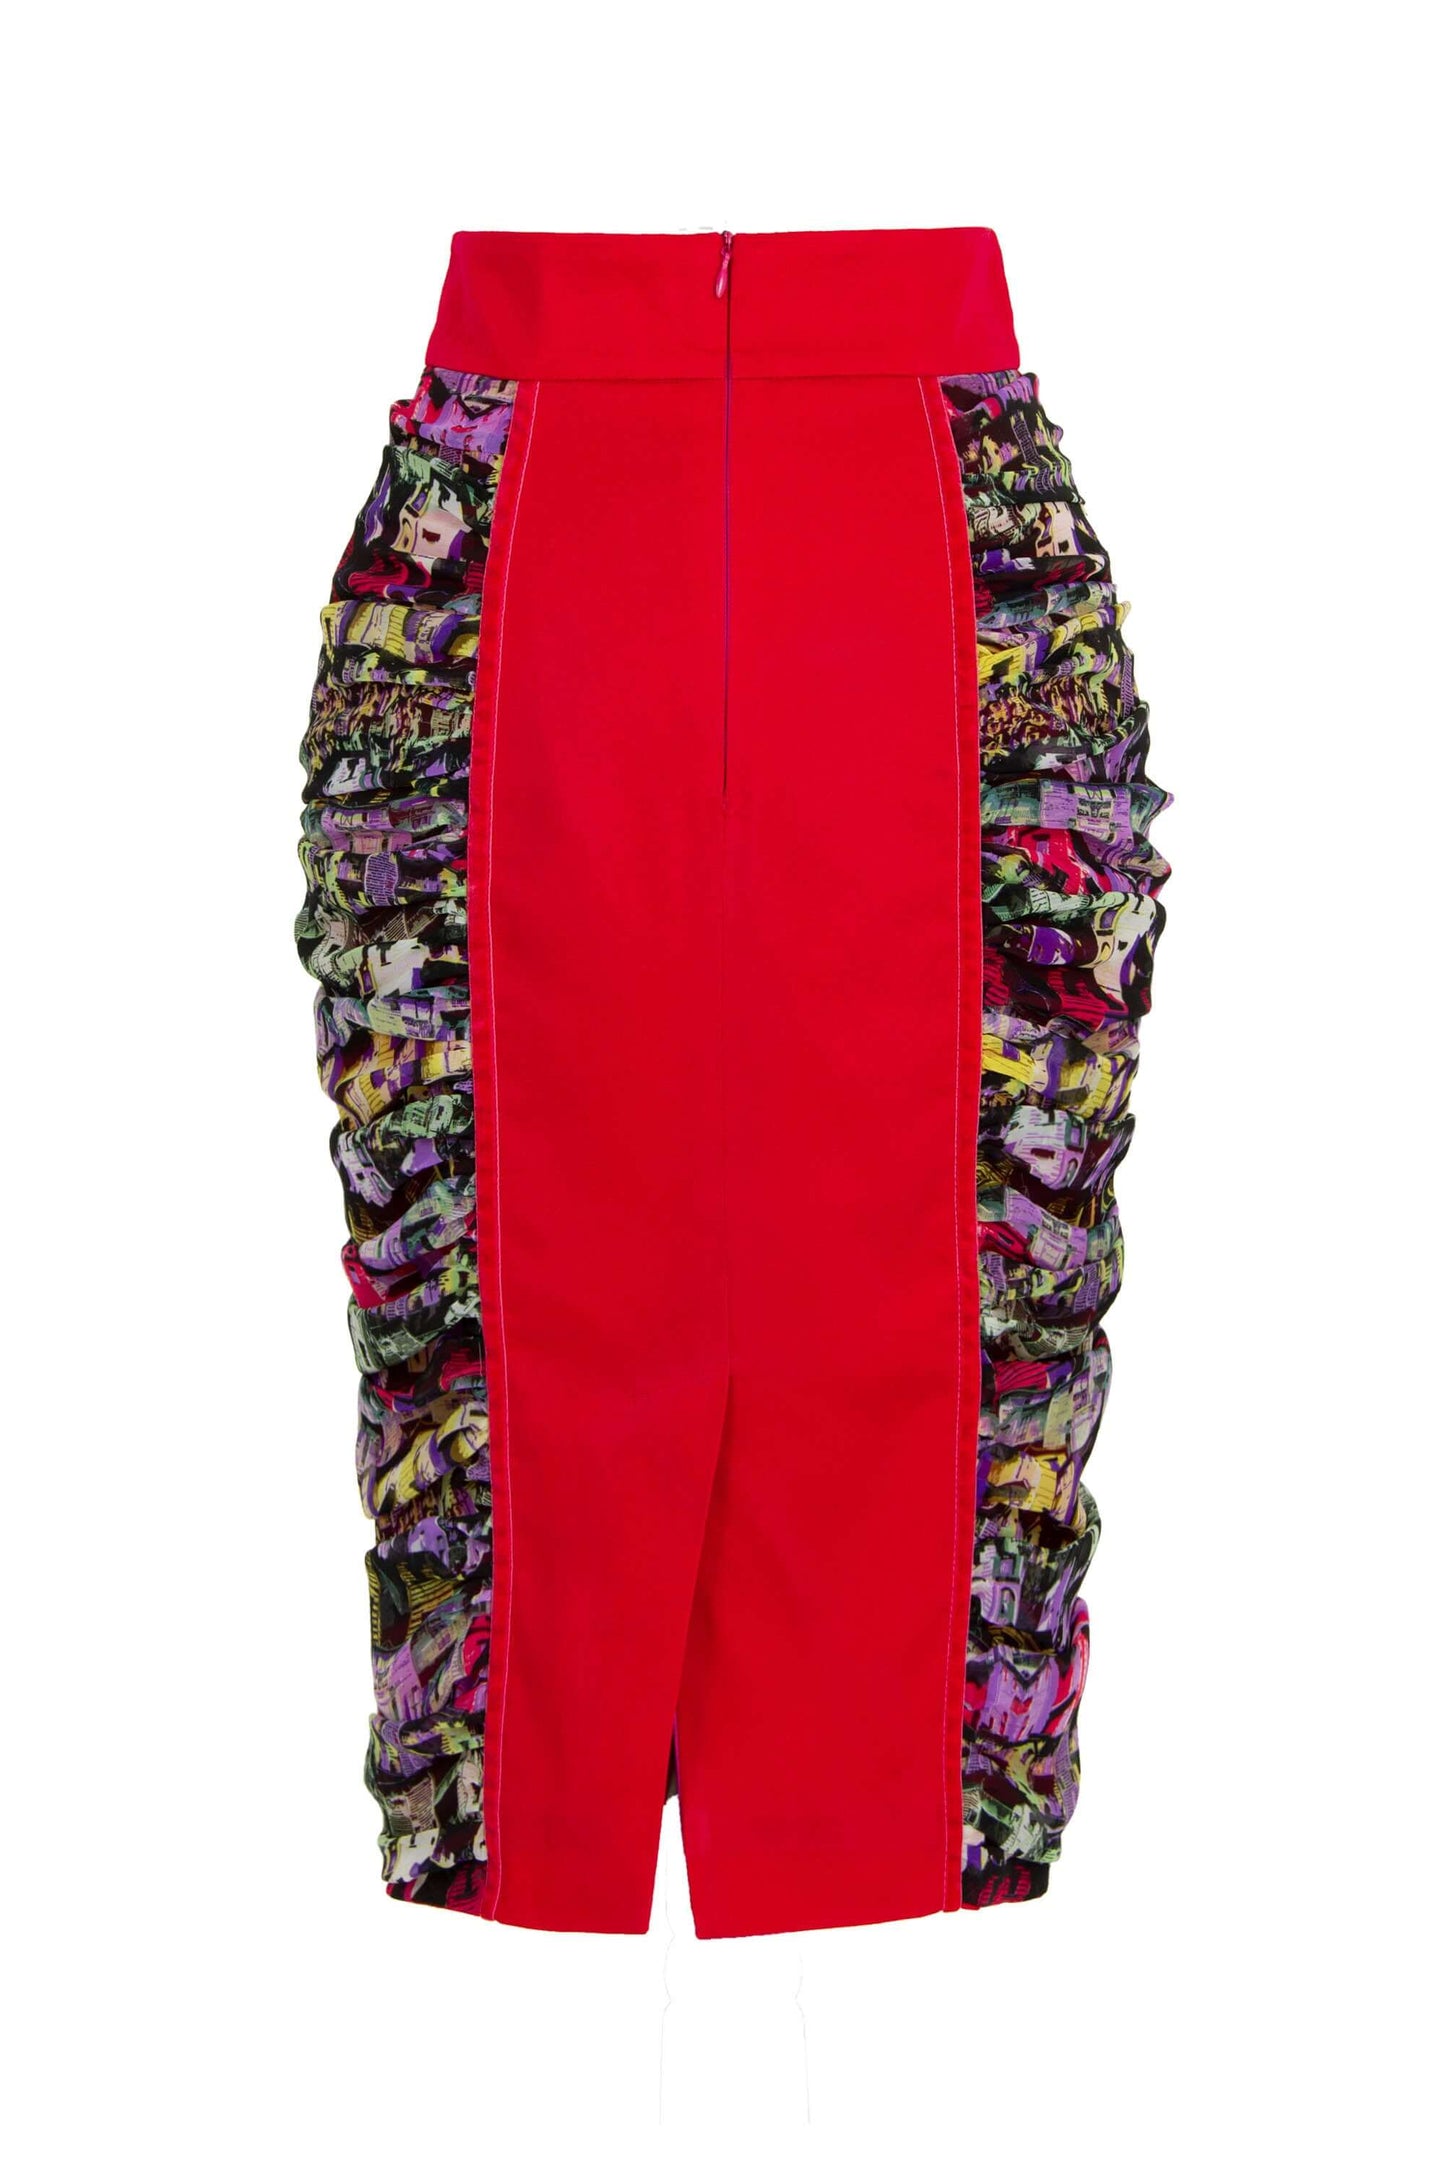 Centre Stage Bodycon Midi Skirt - Red by Tia Dorraine Women's Luxury Fashion Designer Clothing Brand